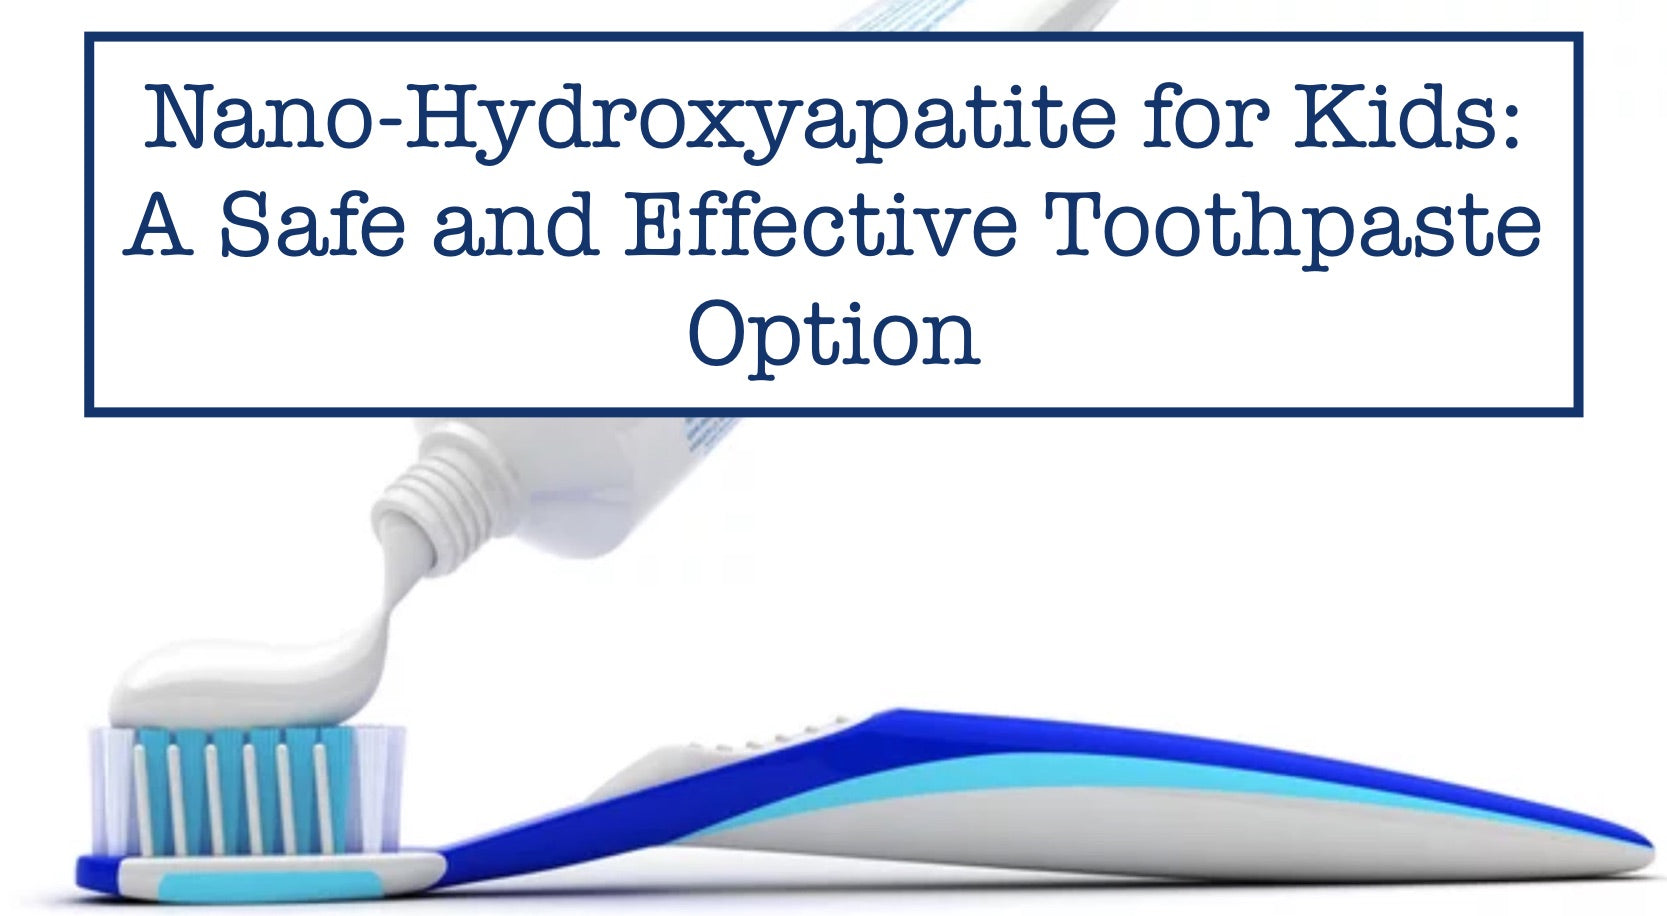 Nano-Hydroxyapatite for Kids: A Safe and Effective Toothpaste Option